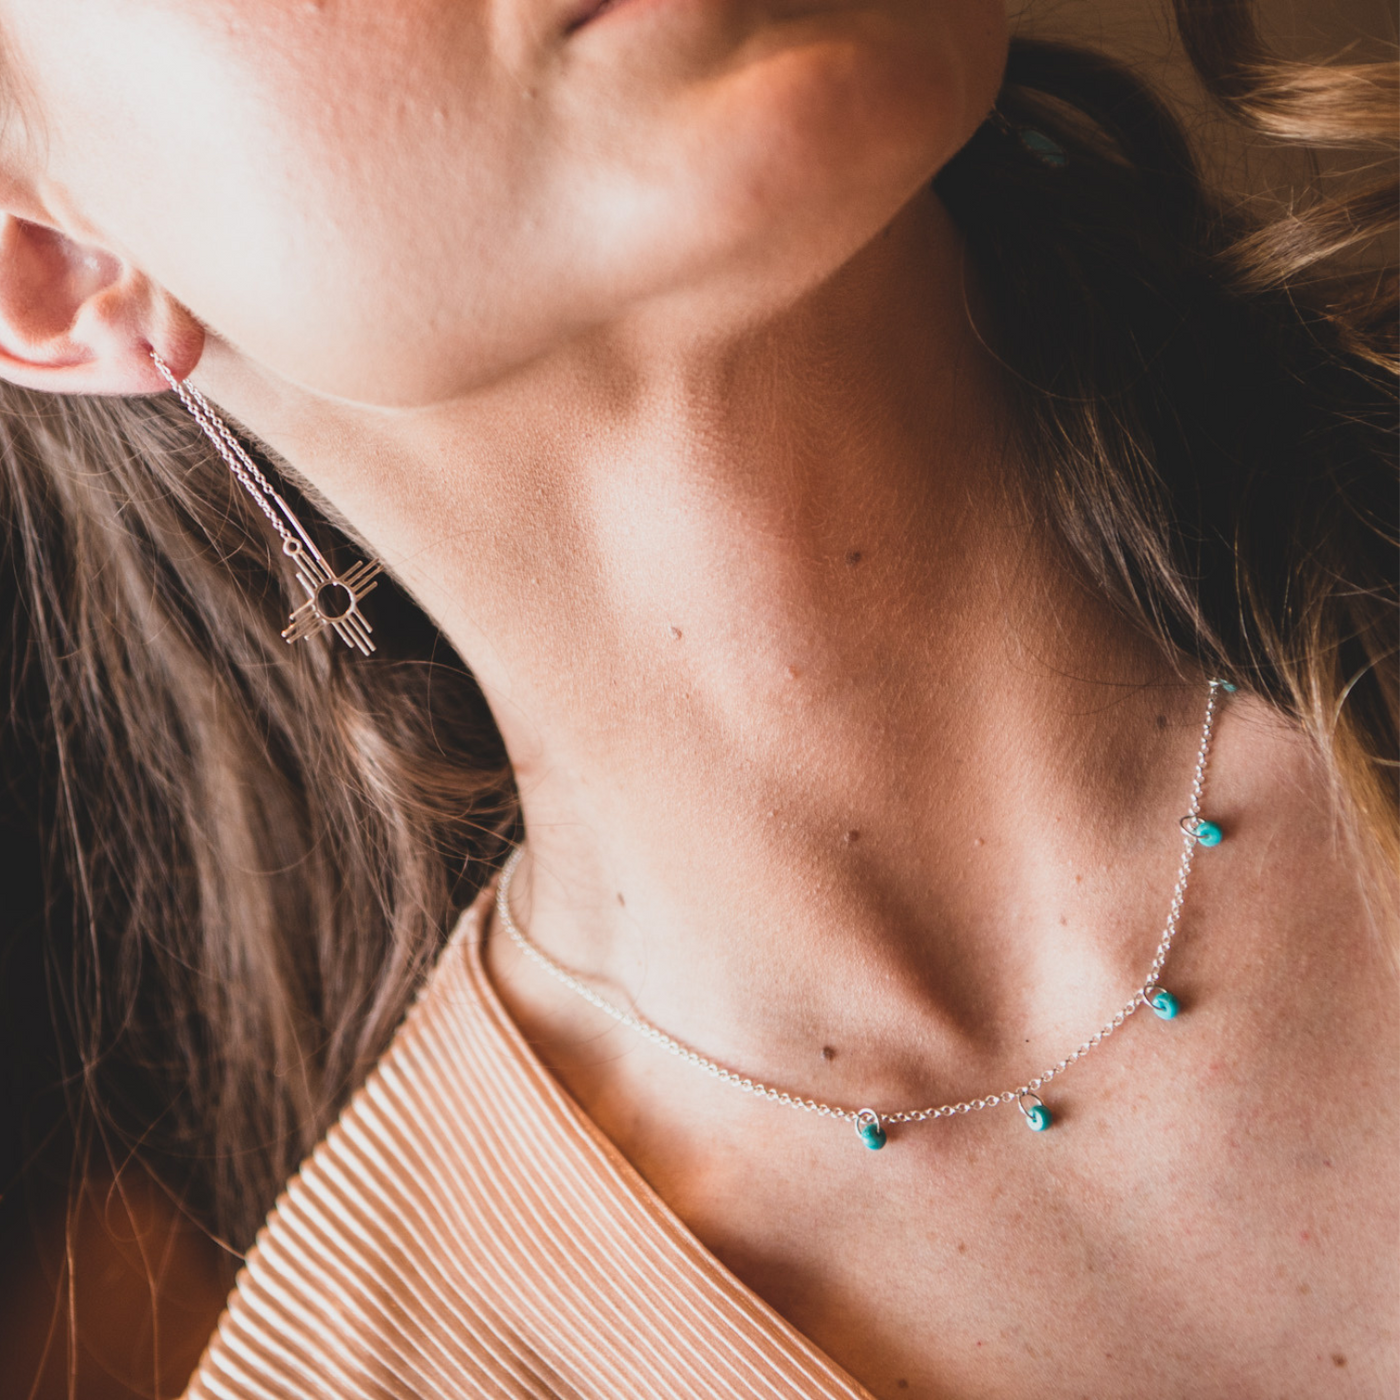 Minimalist Necklace featuring Turquoise Stones